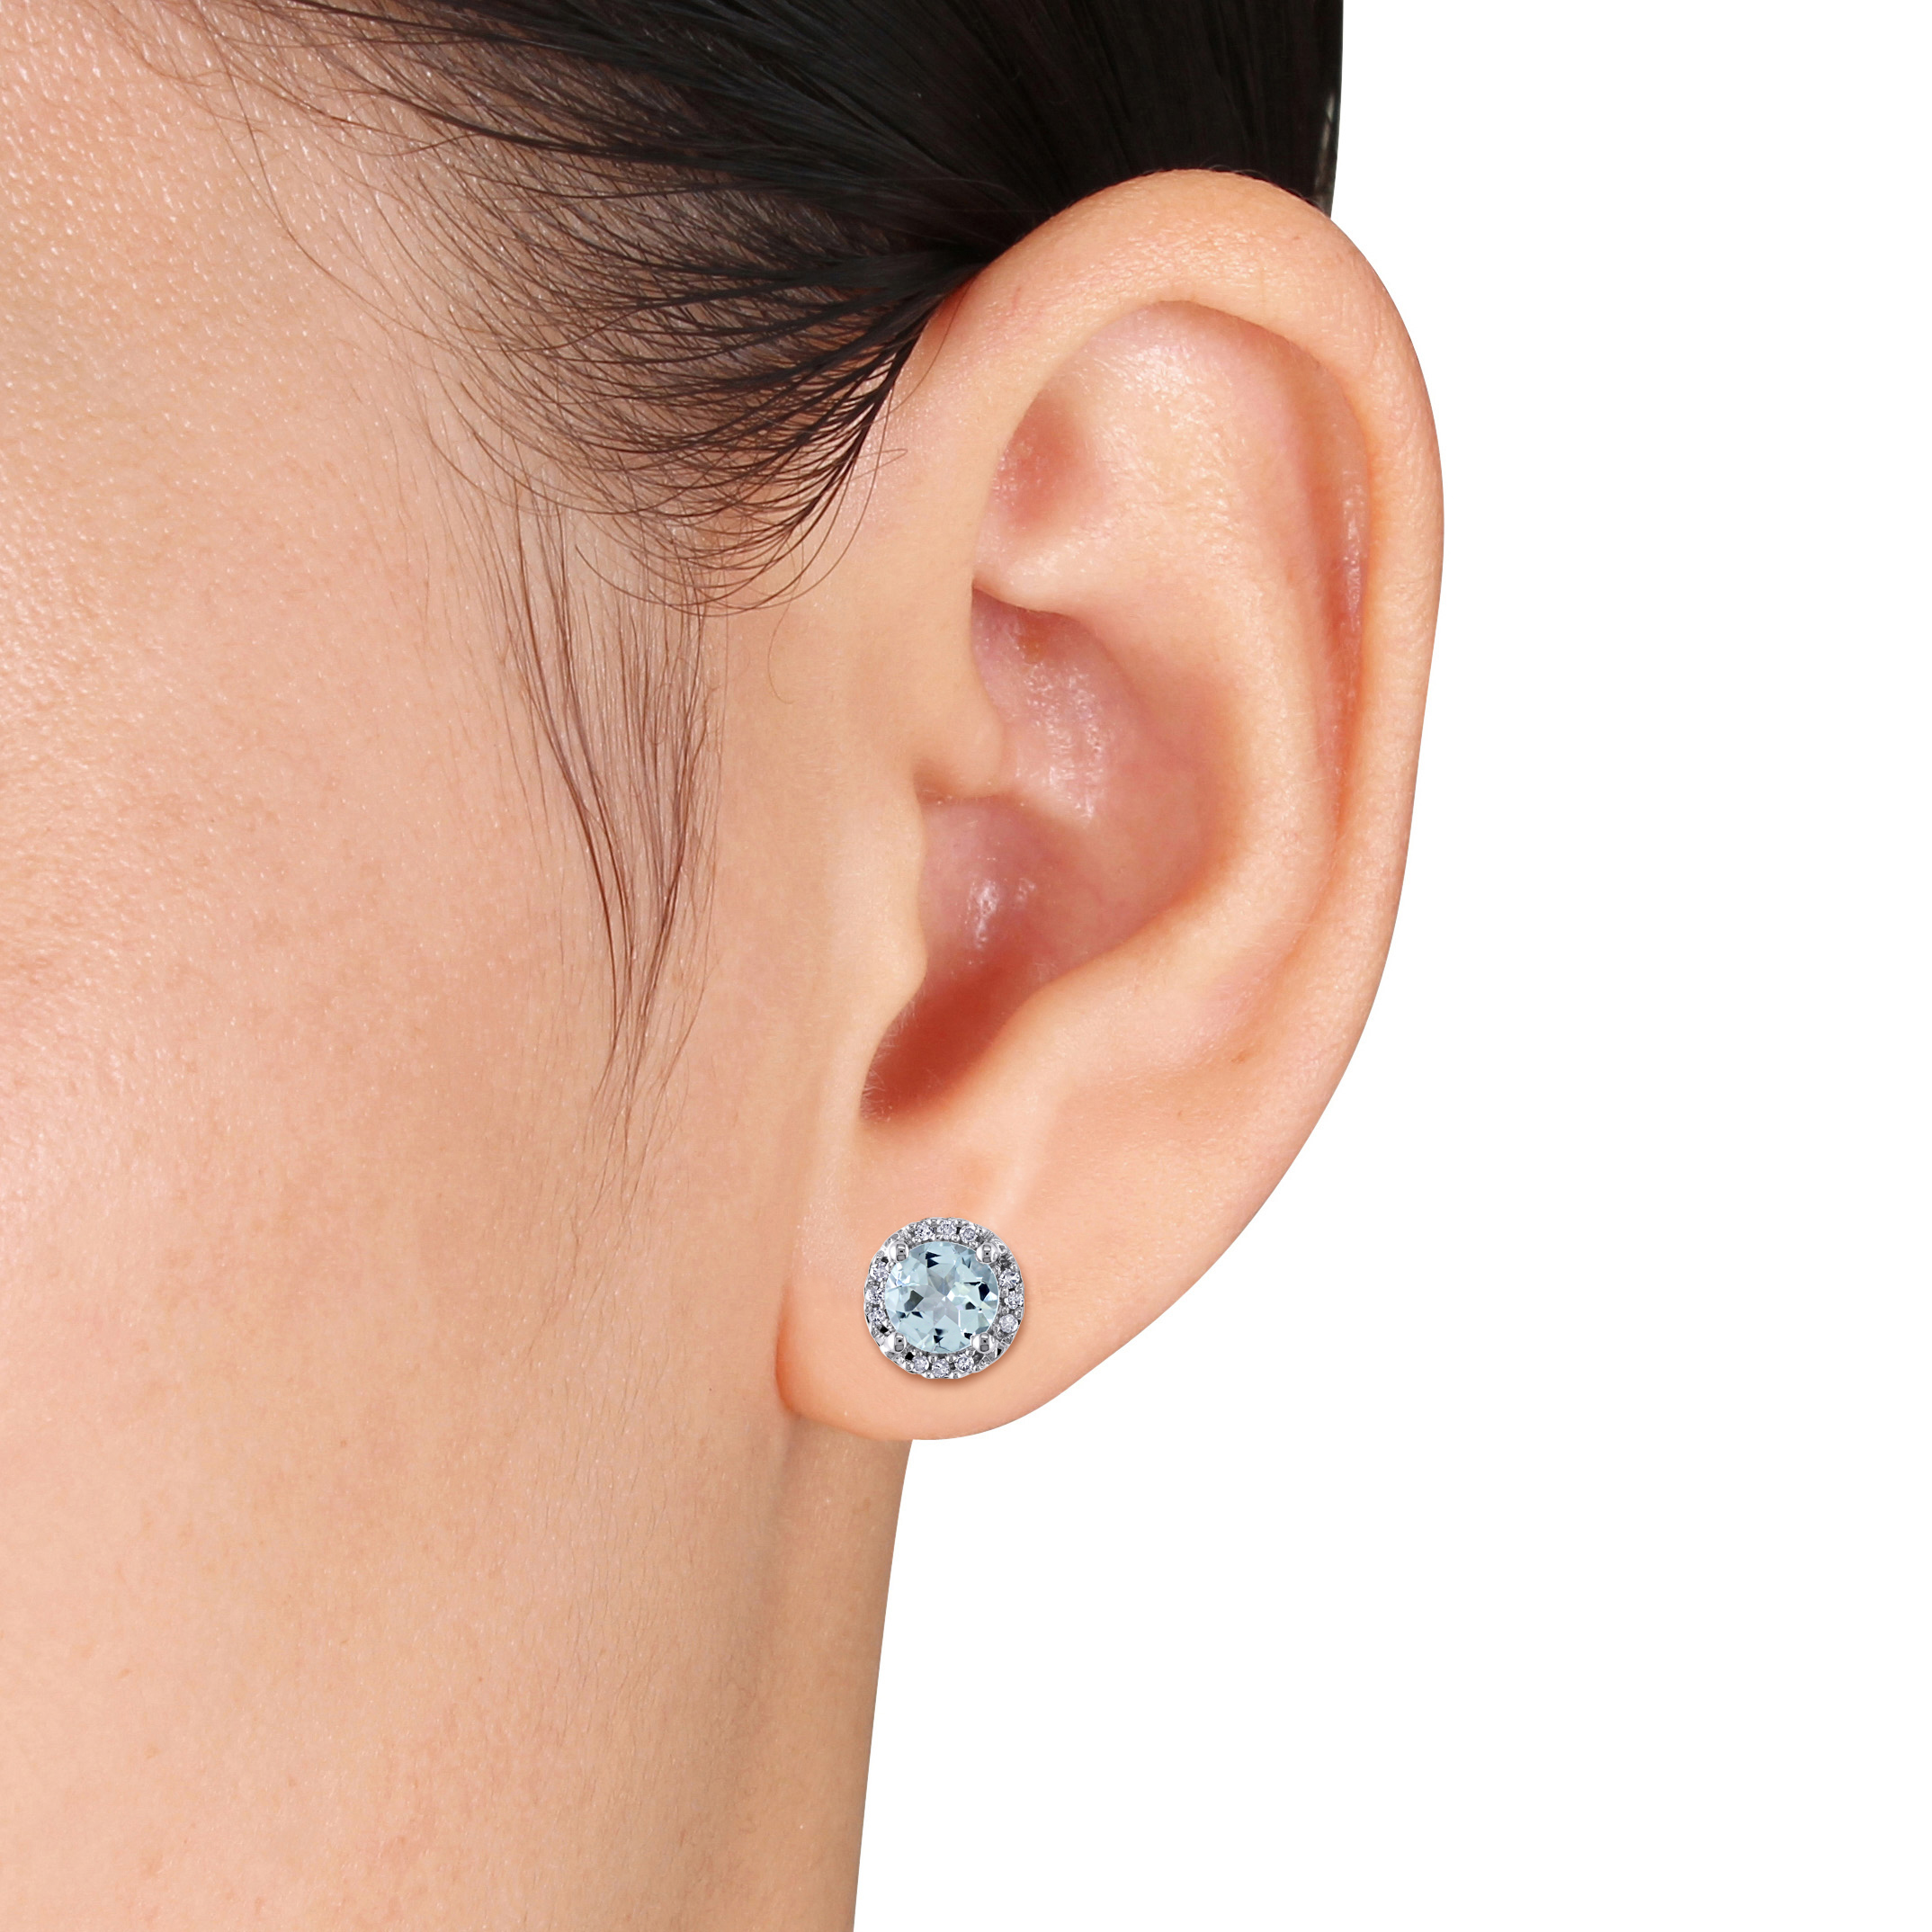 Halo Diamond and Aquamarine Stud Earrings in 10k White Gold